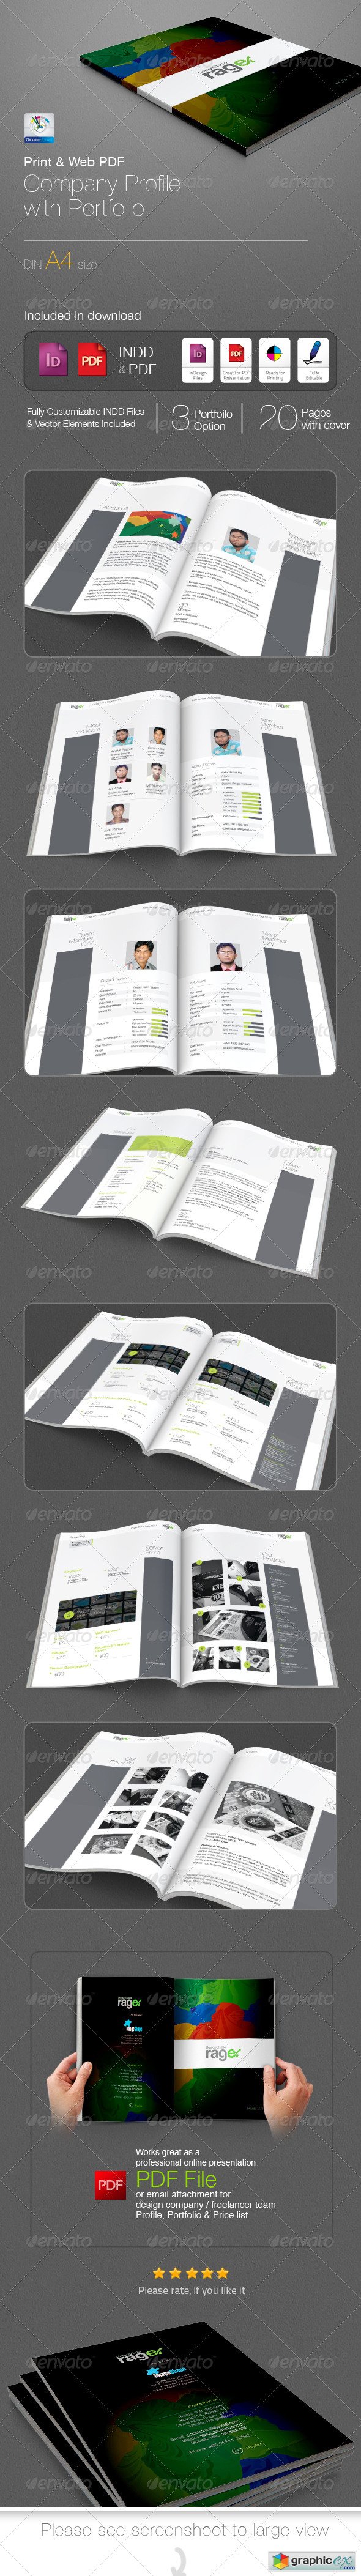 Company Profile with Portfolio Booklet